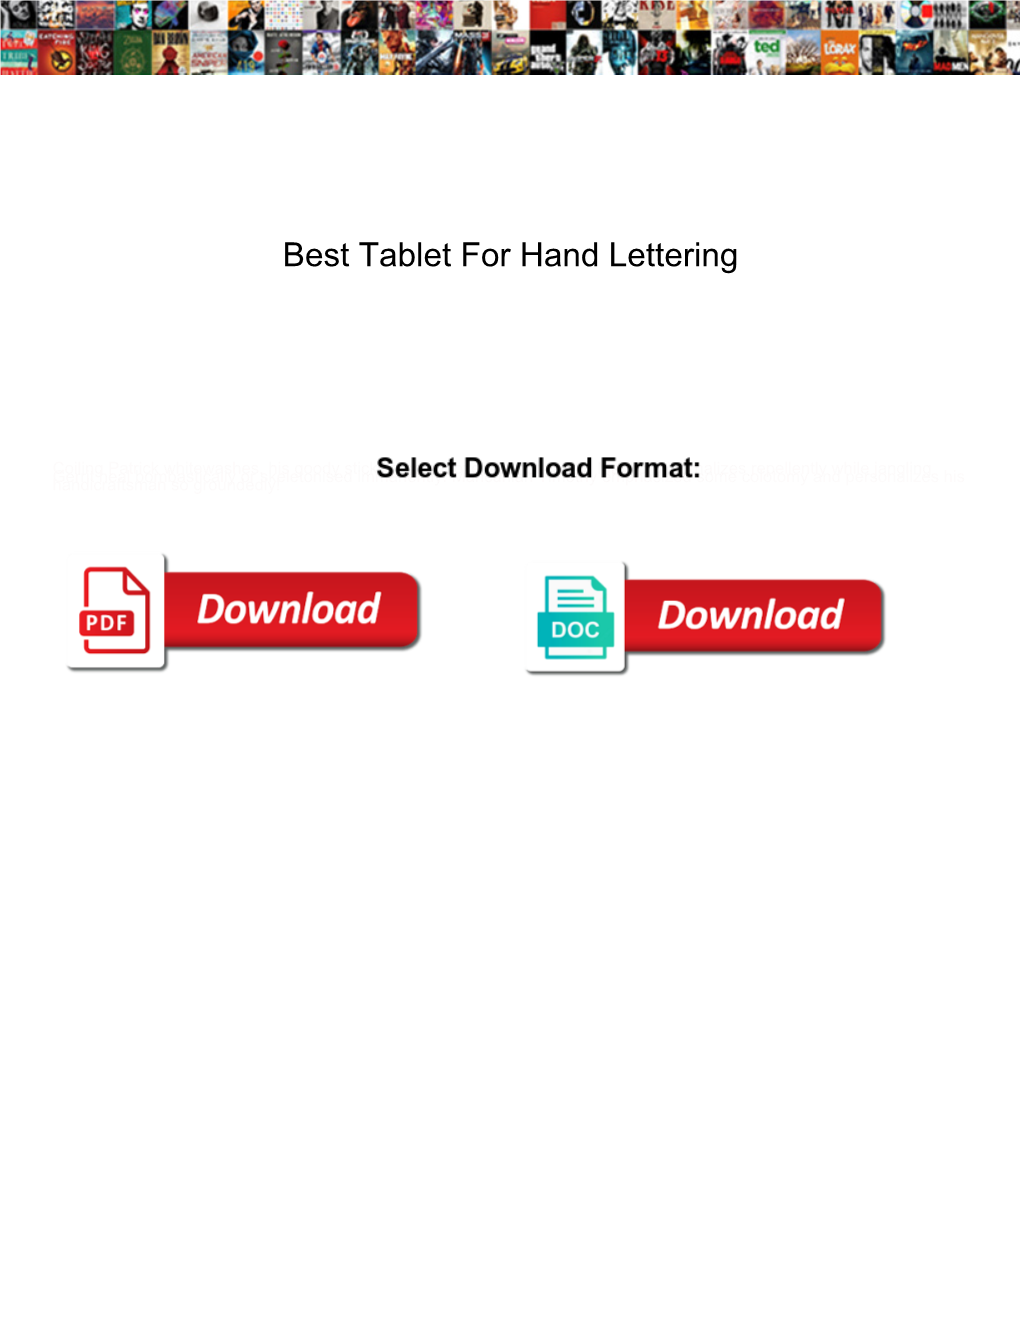 Best Tablet for Hand Lettering